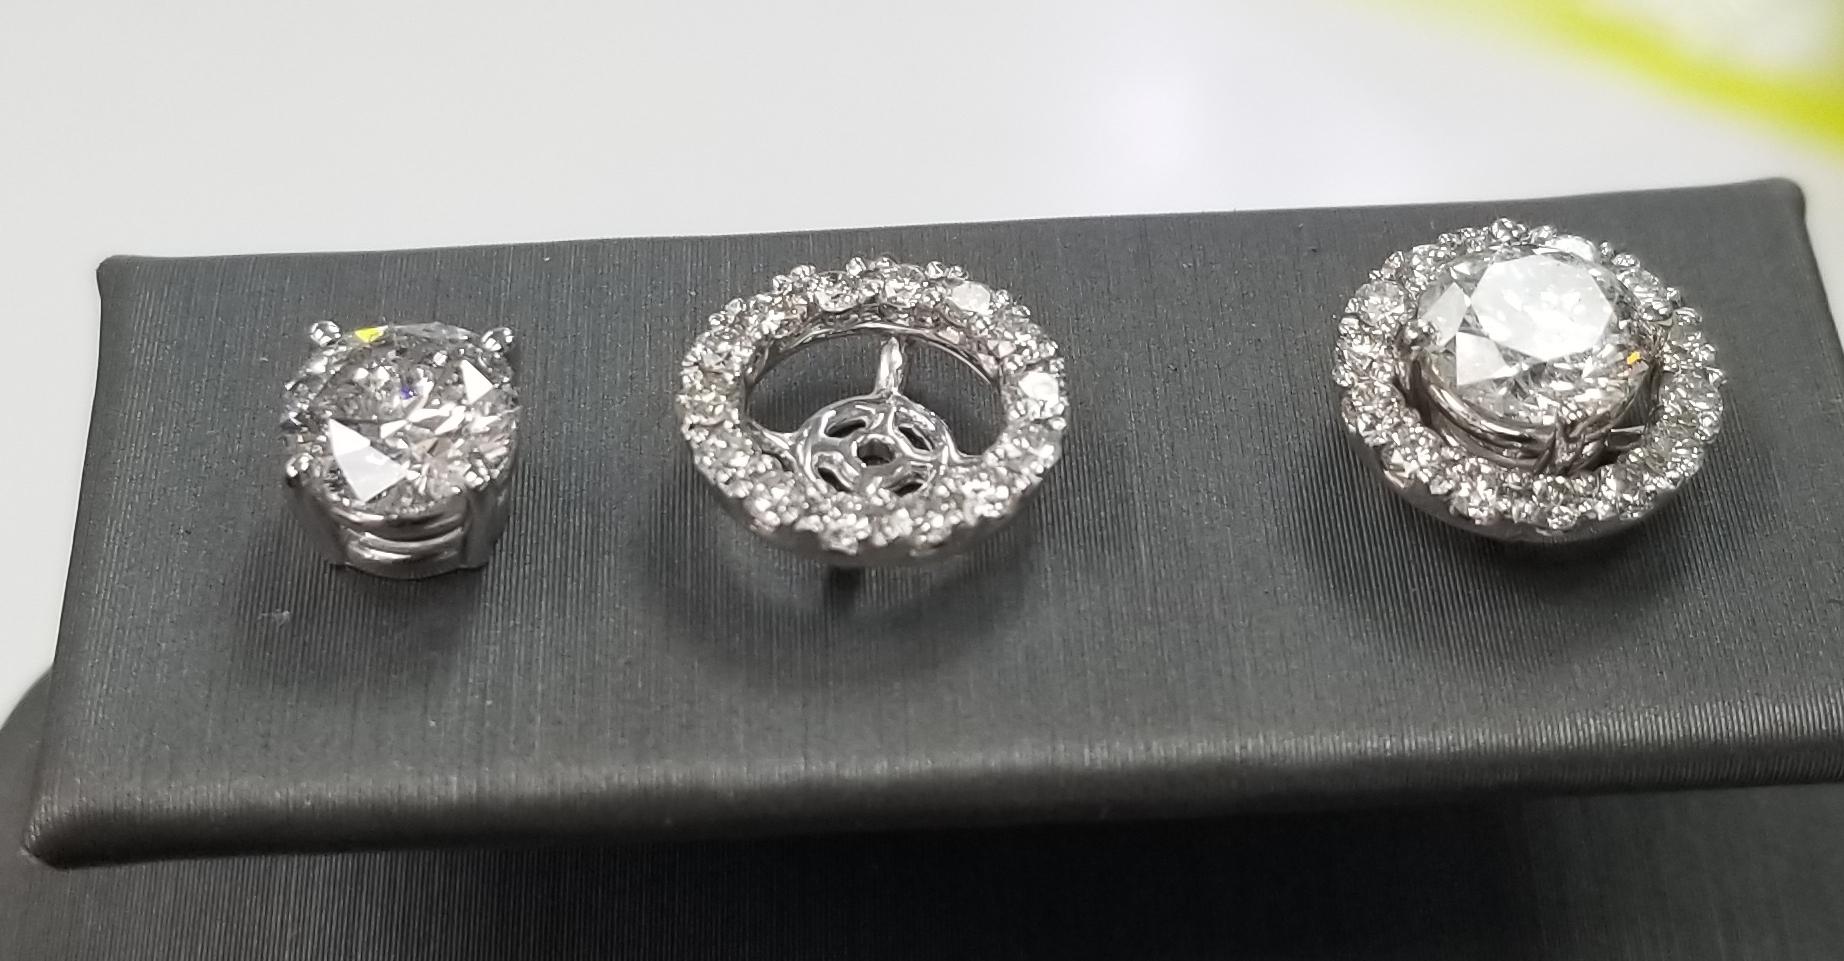 14k white gold diamond stud earrings with diamond halo-jackets, containing 2 brilliant cut diamonds; color 